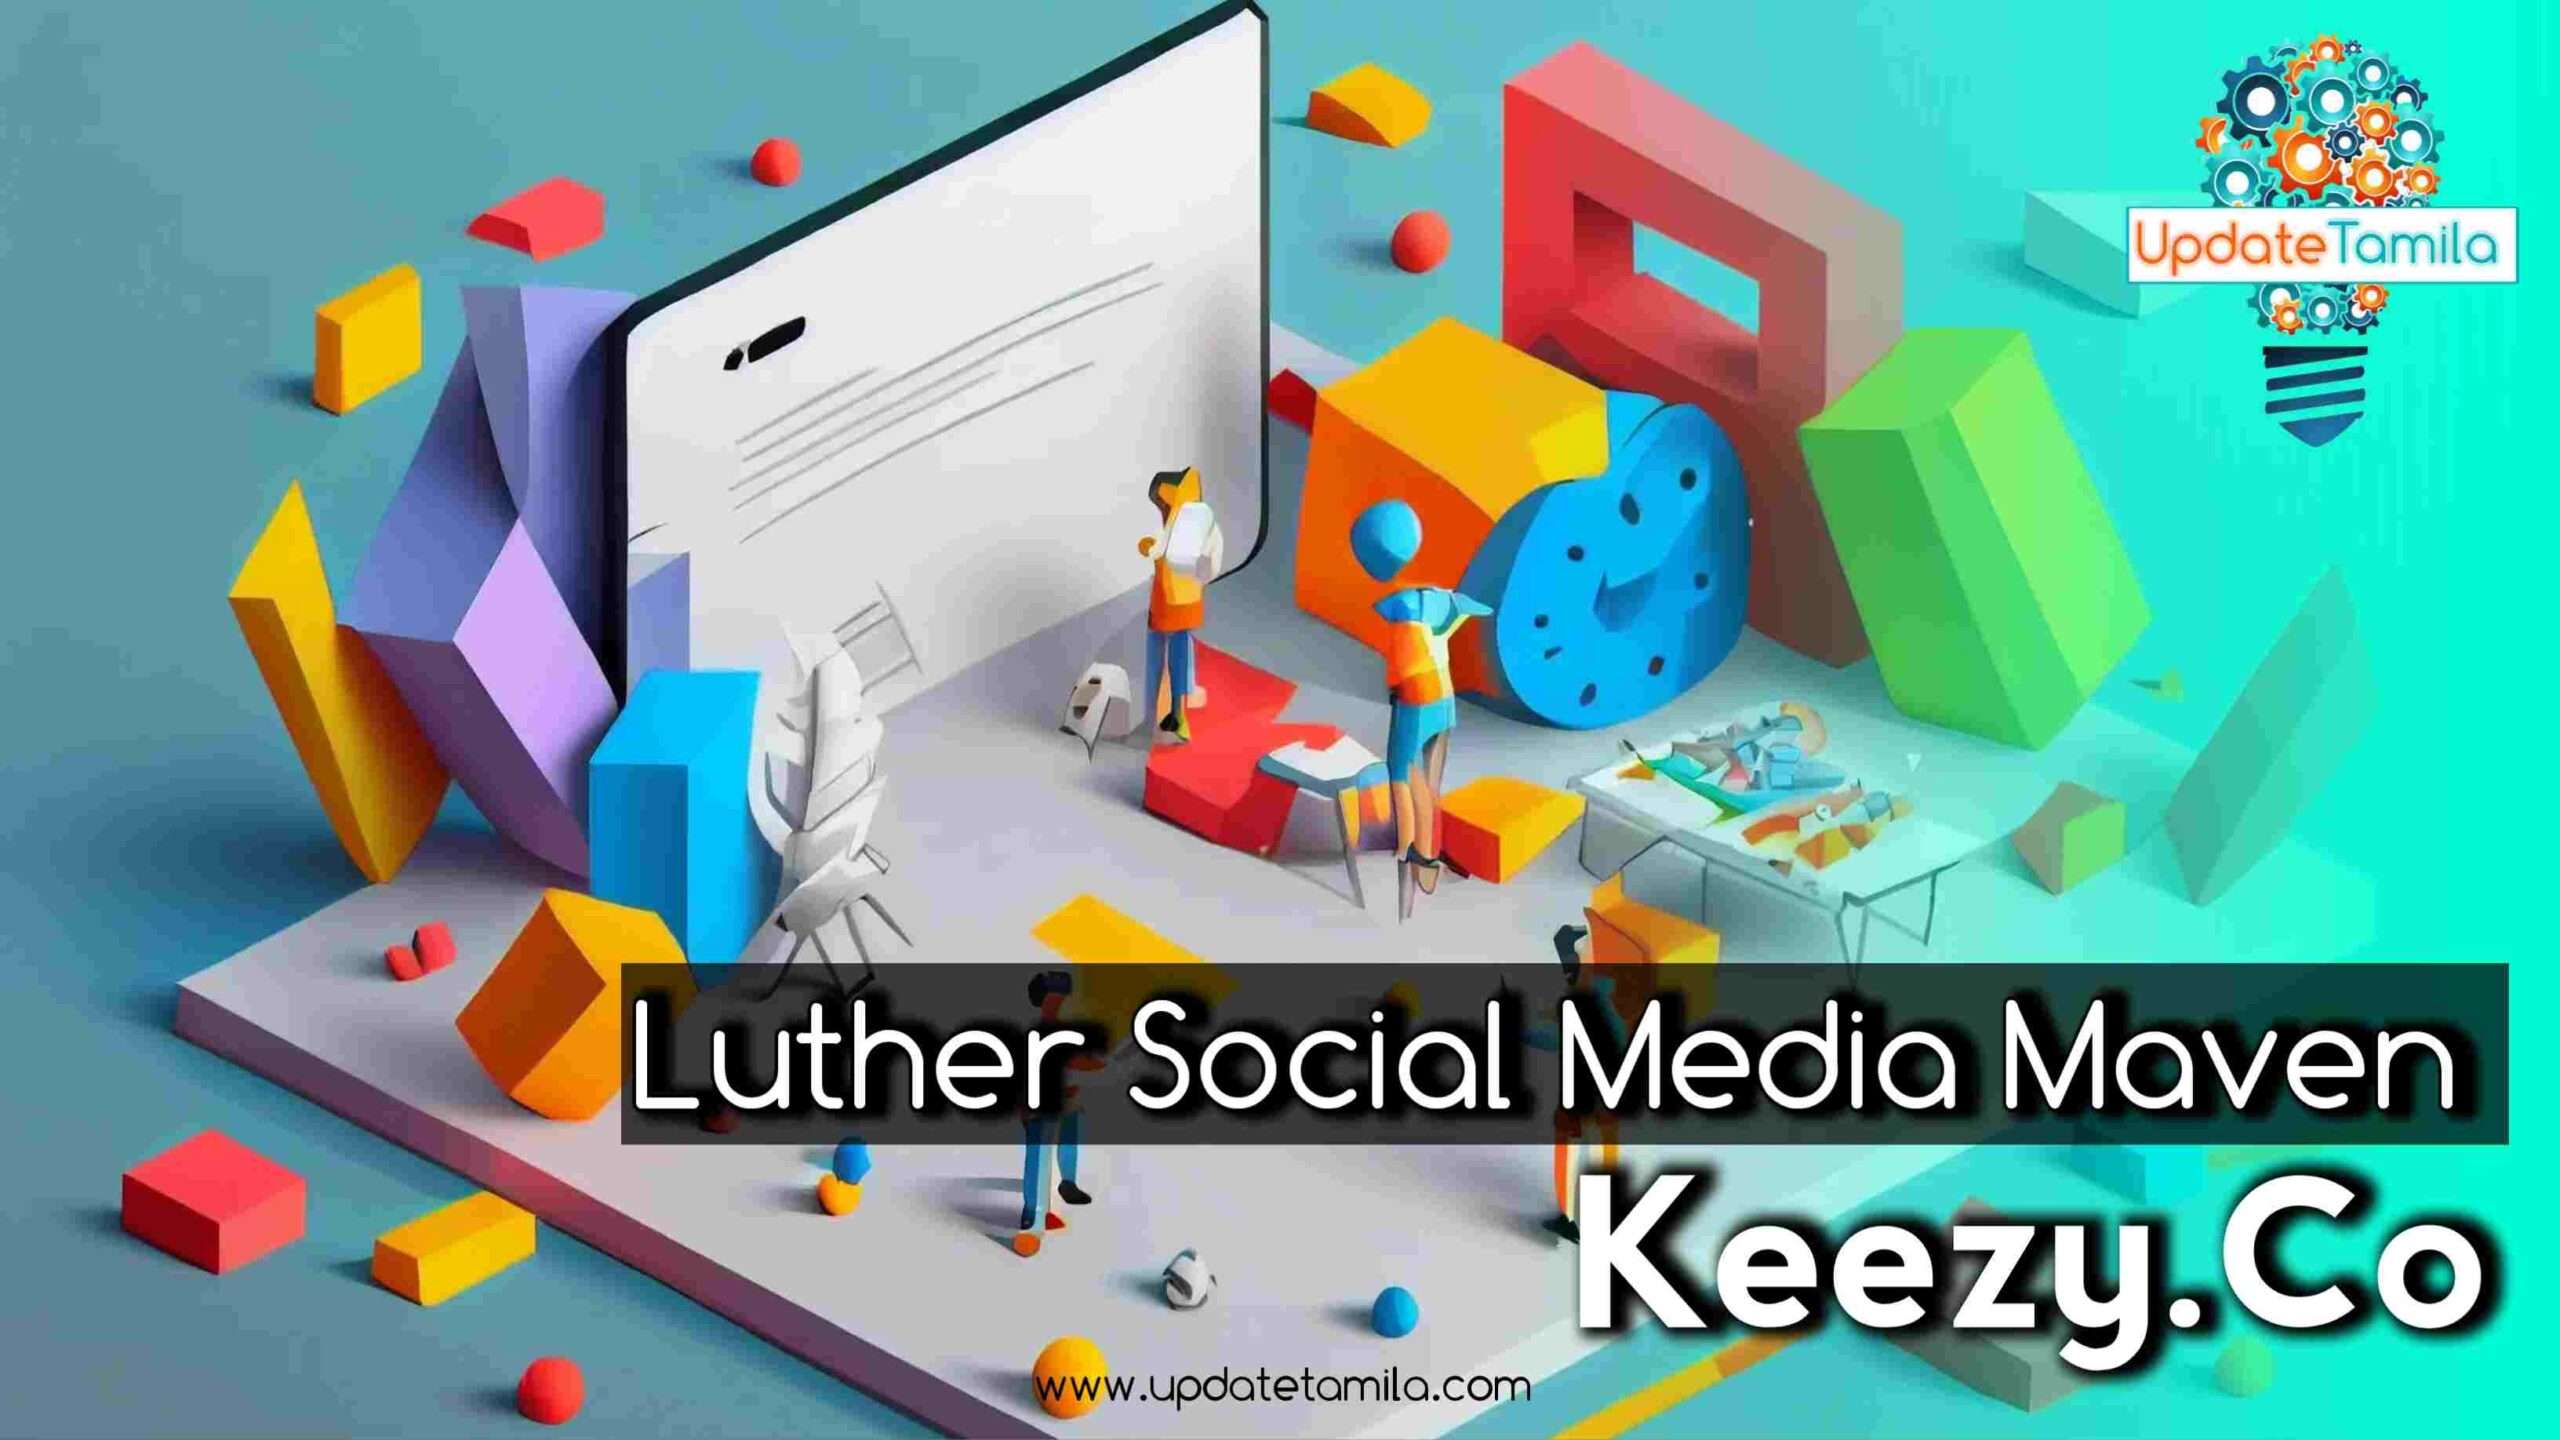 Luther: Social Media Maven at Keezy.co